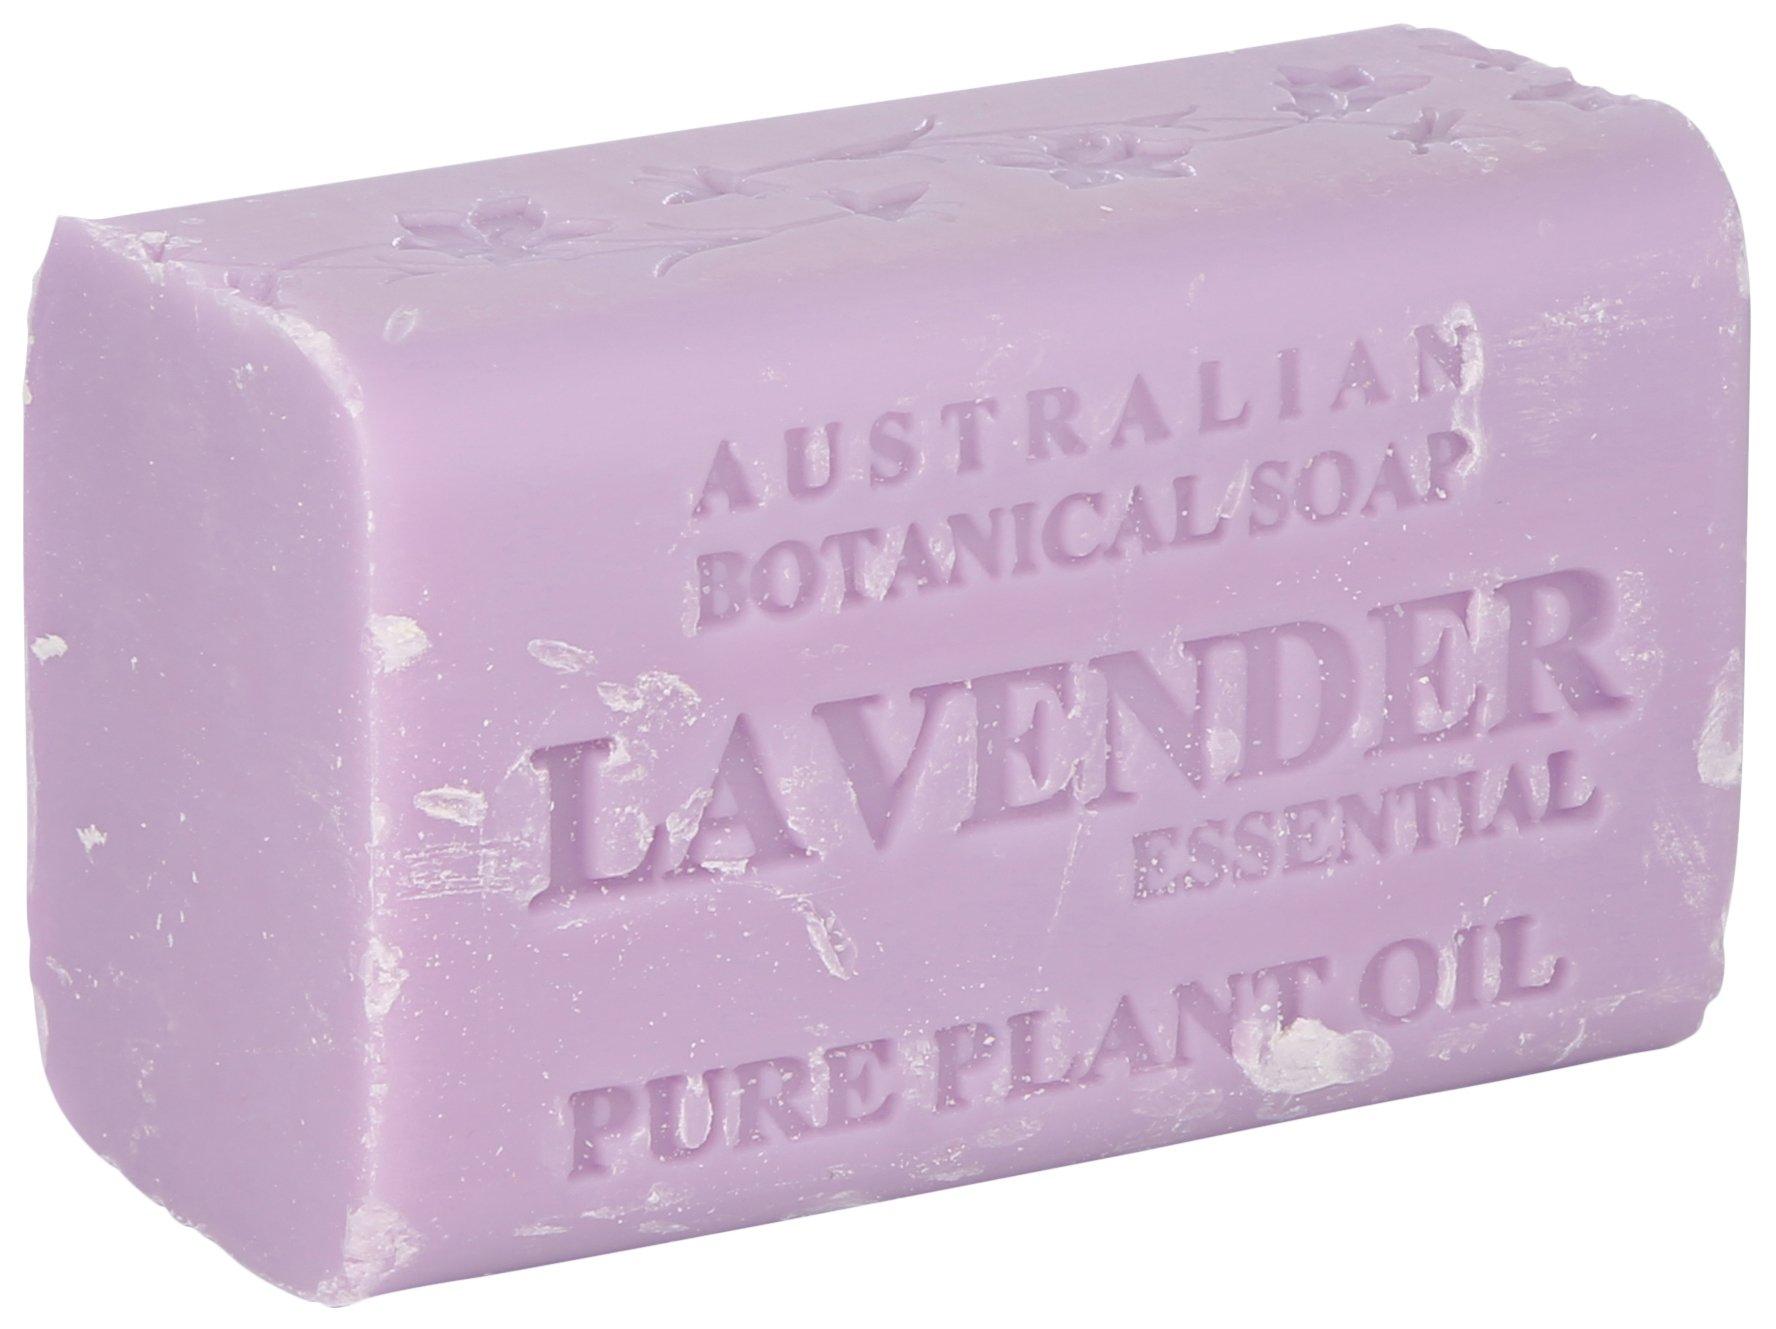 6.6 Oz. Lavender Triple Milled Bar Soap